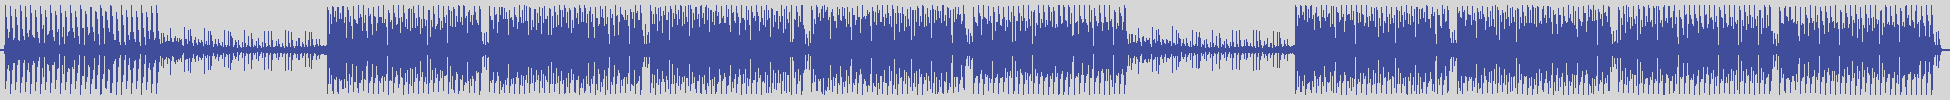 nf_boyz_records [NFY059] La Kanto - Take Life Well [Original Mix] audio wave form